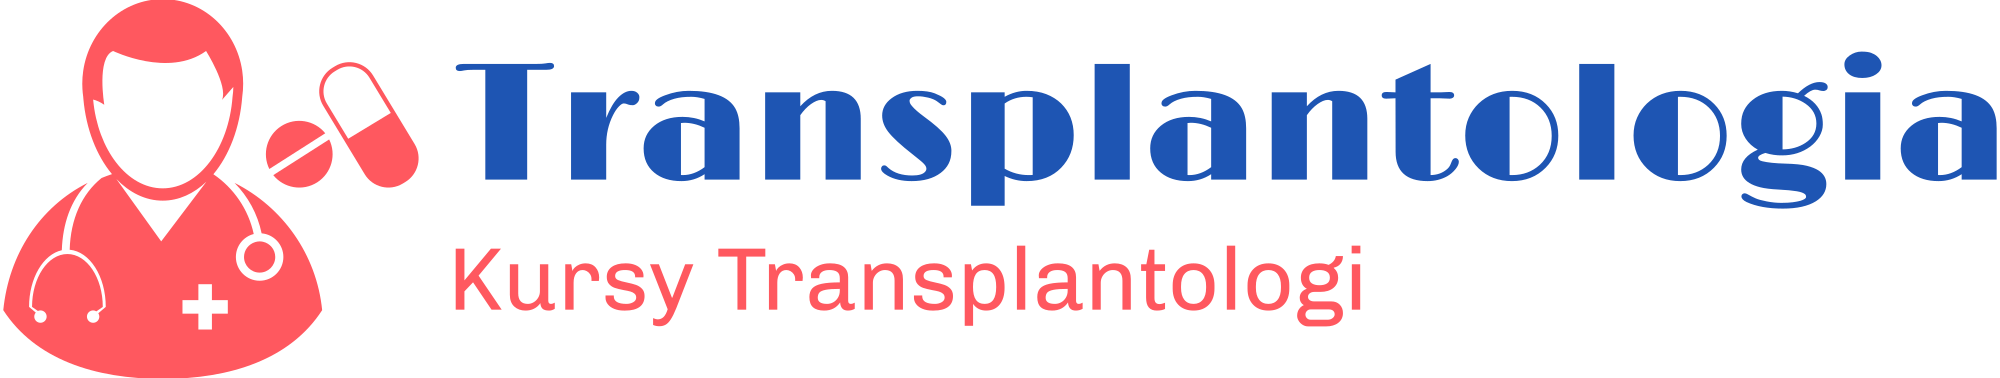 Transplantologia - kursy transplantologii